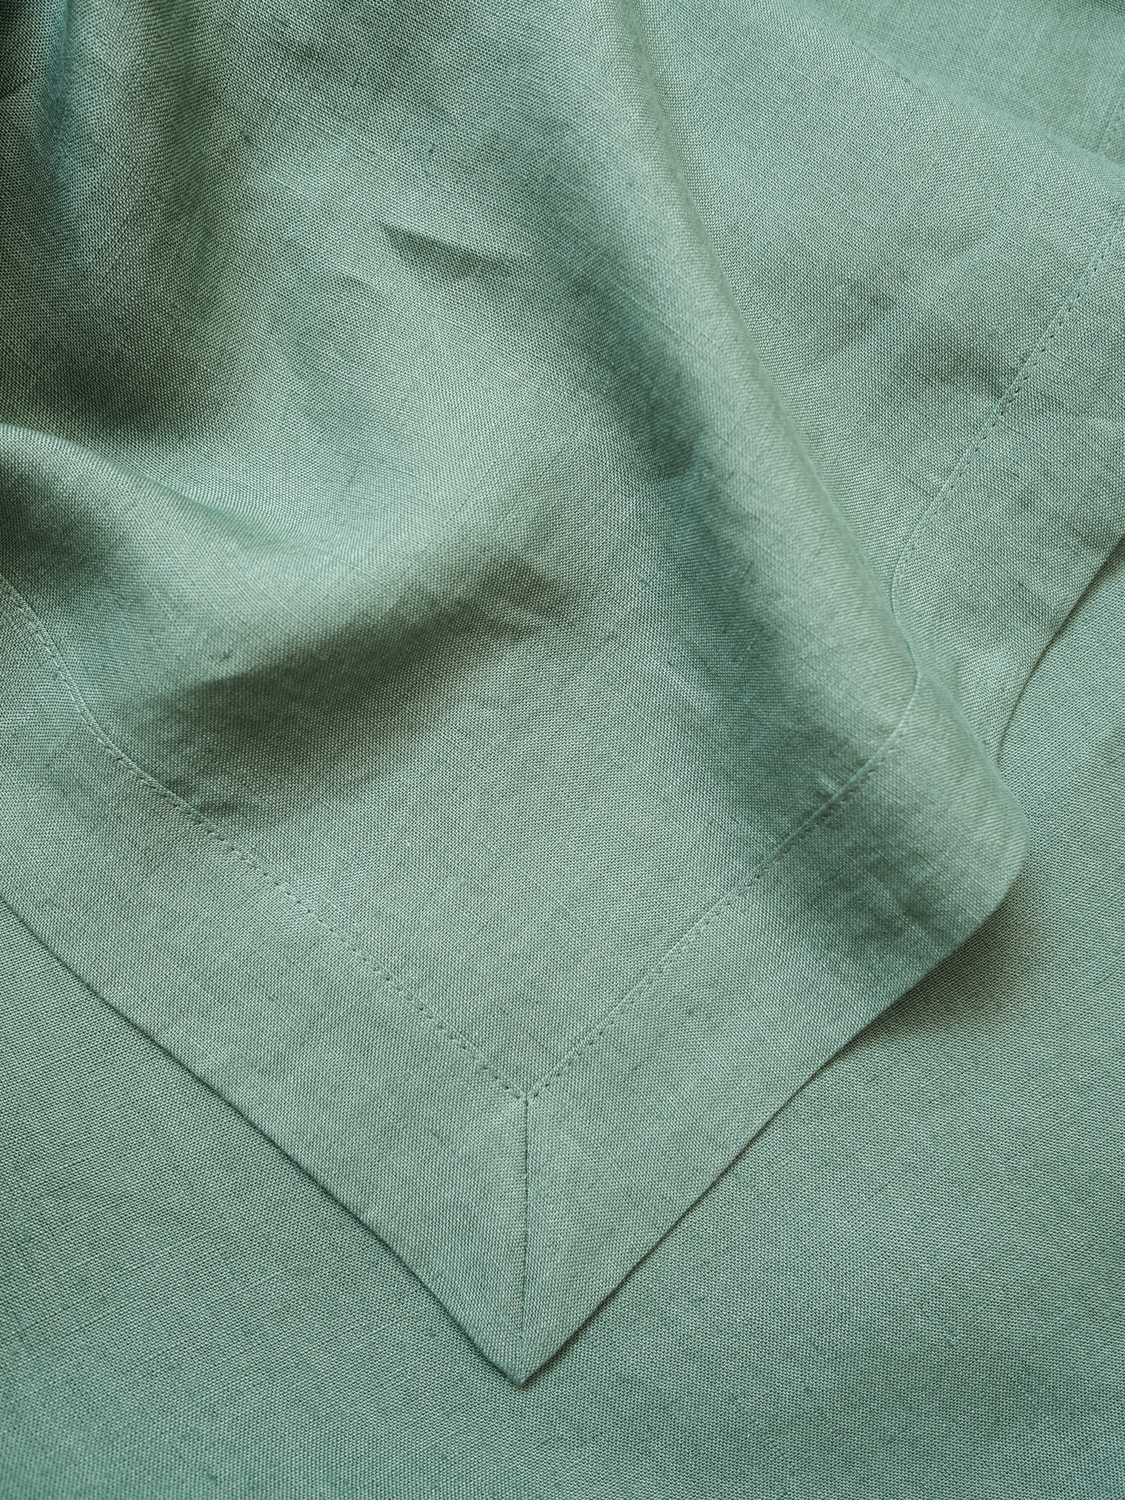 Green linen tablecloth